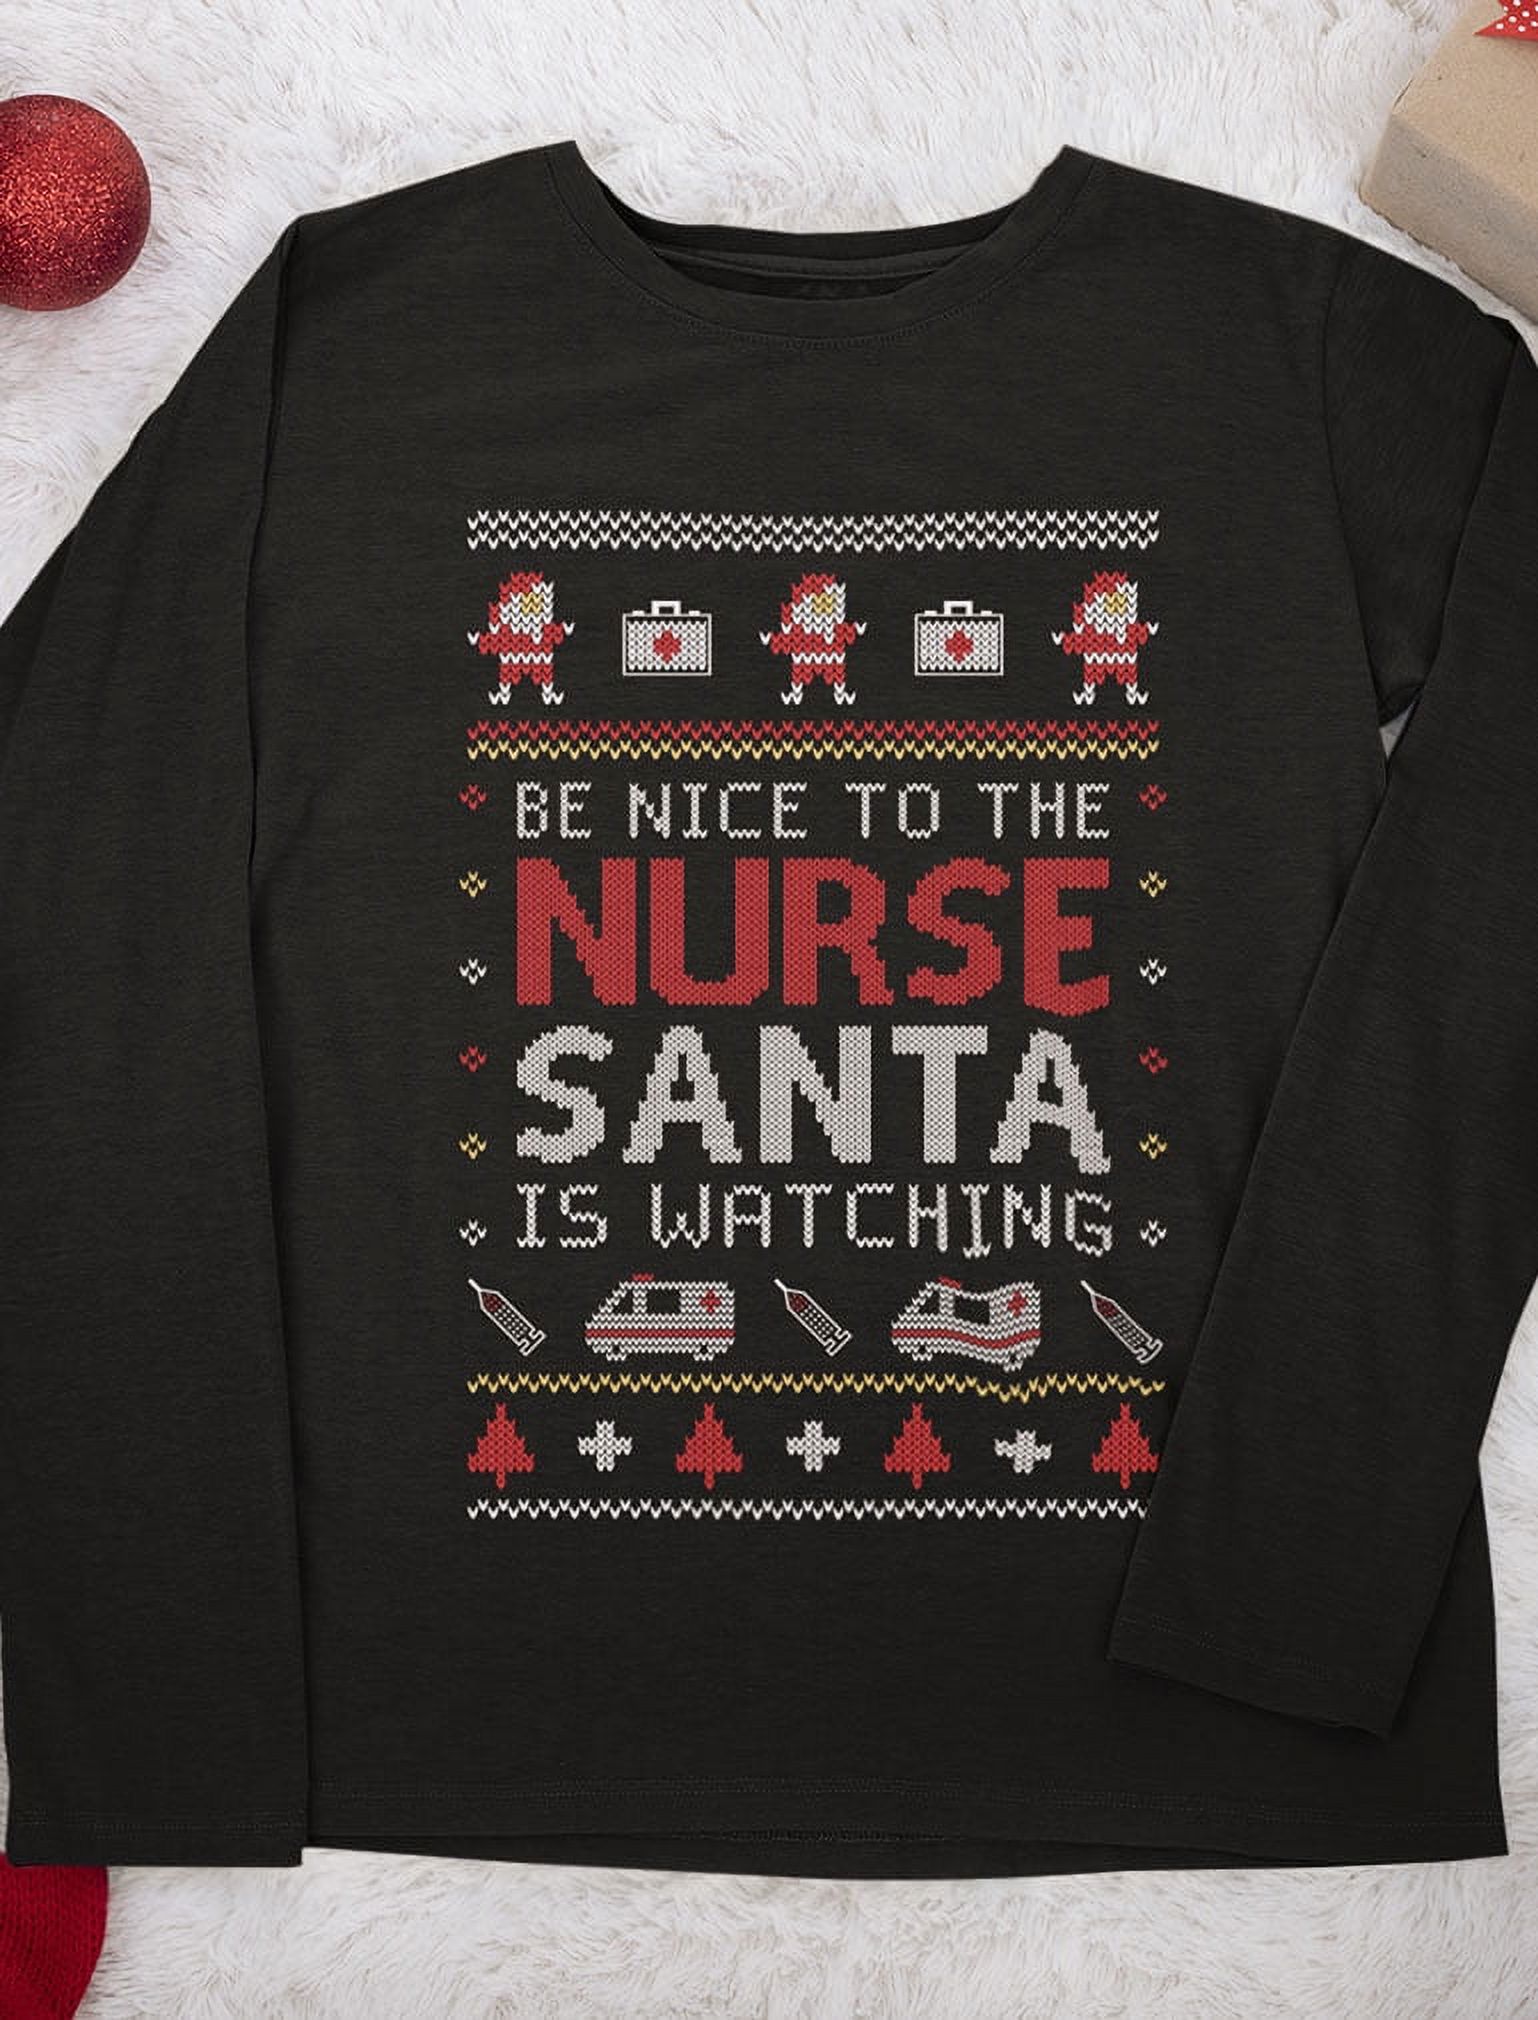 Tstars Womens Ugly Christmas Sweater Gift for Nurse Christmas Holiday Shirts Xmas Party Funny Humor Christmas Gifts for Her Nurses Xmas Gift Women Long Sleeve T Shirt Ugly Xmas Sweater - image 5 of 6